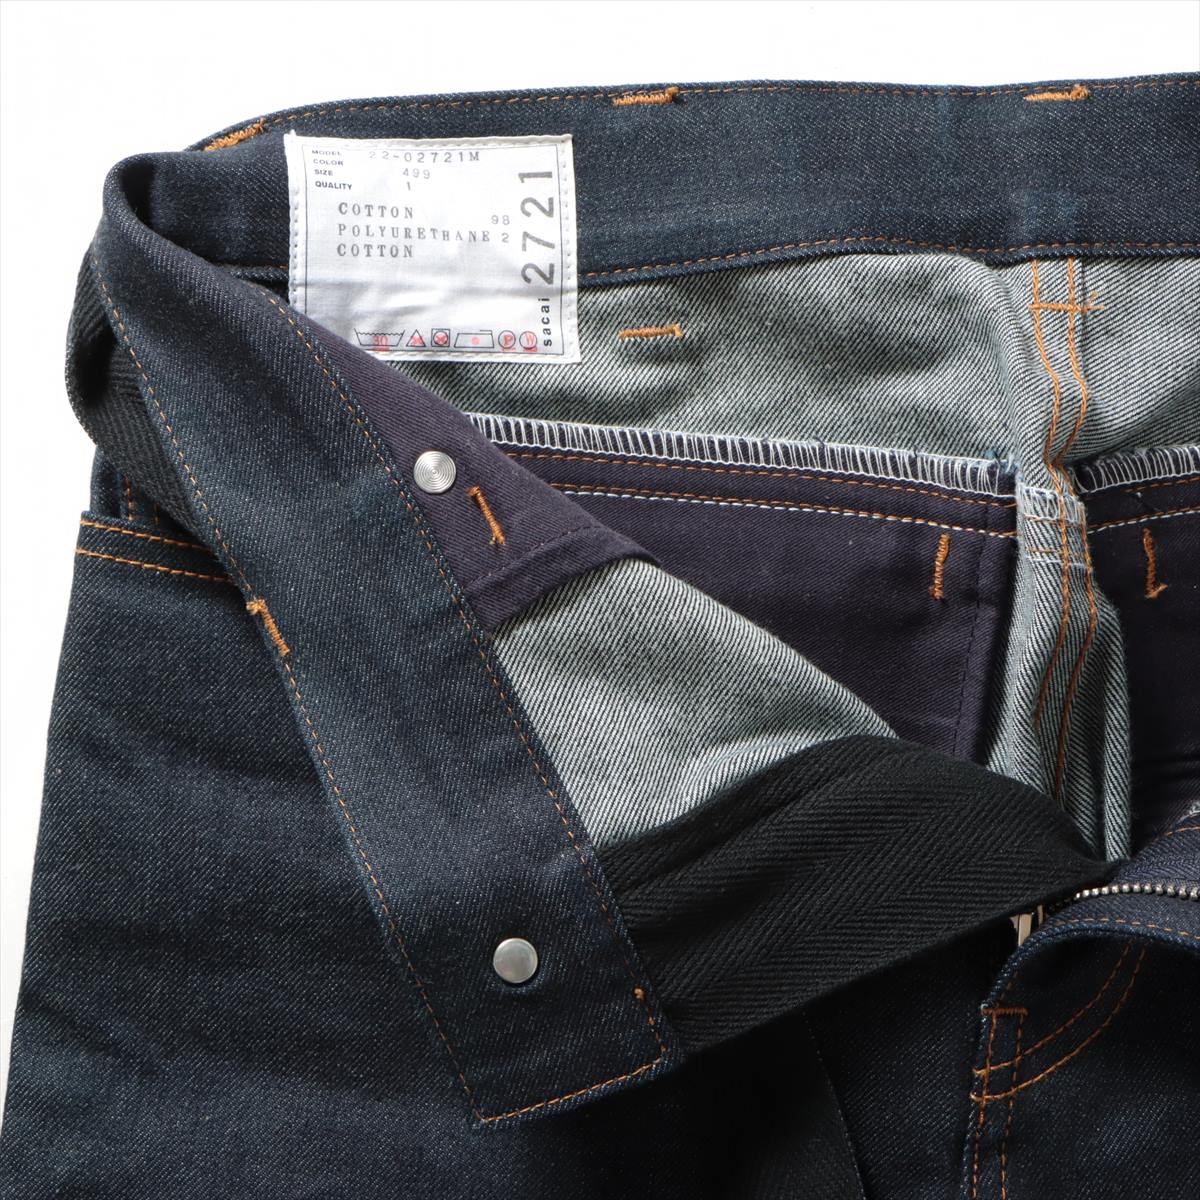 Sacai 22SS Cotton & Polyurethane Denim pants 1 Men's Blue indigo  22-02721M zip design